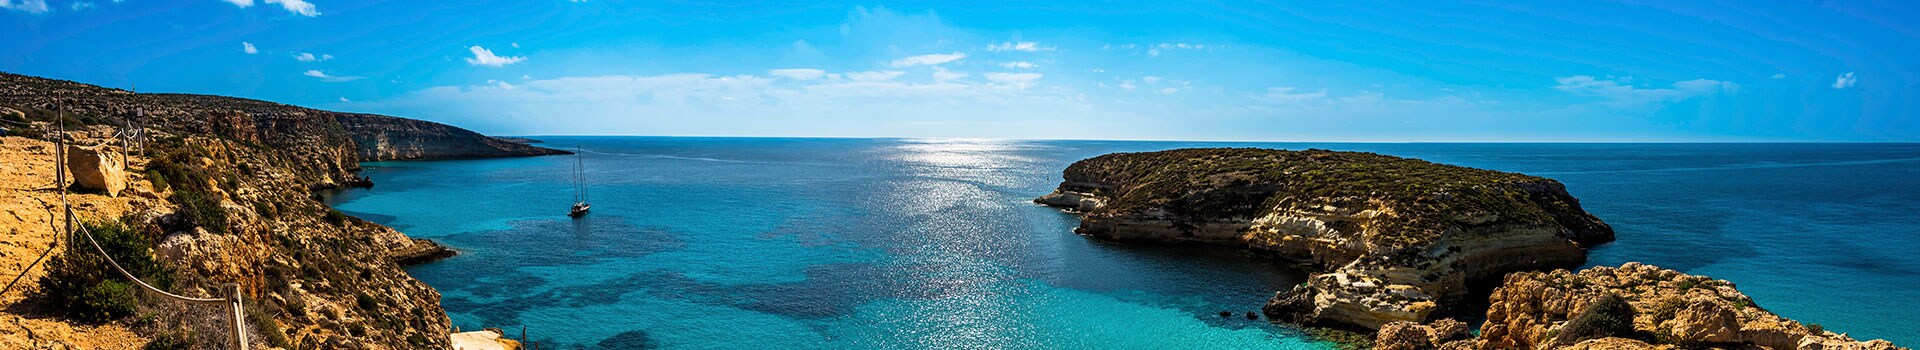 Bolonia - Lampedusa